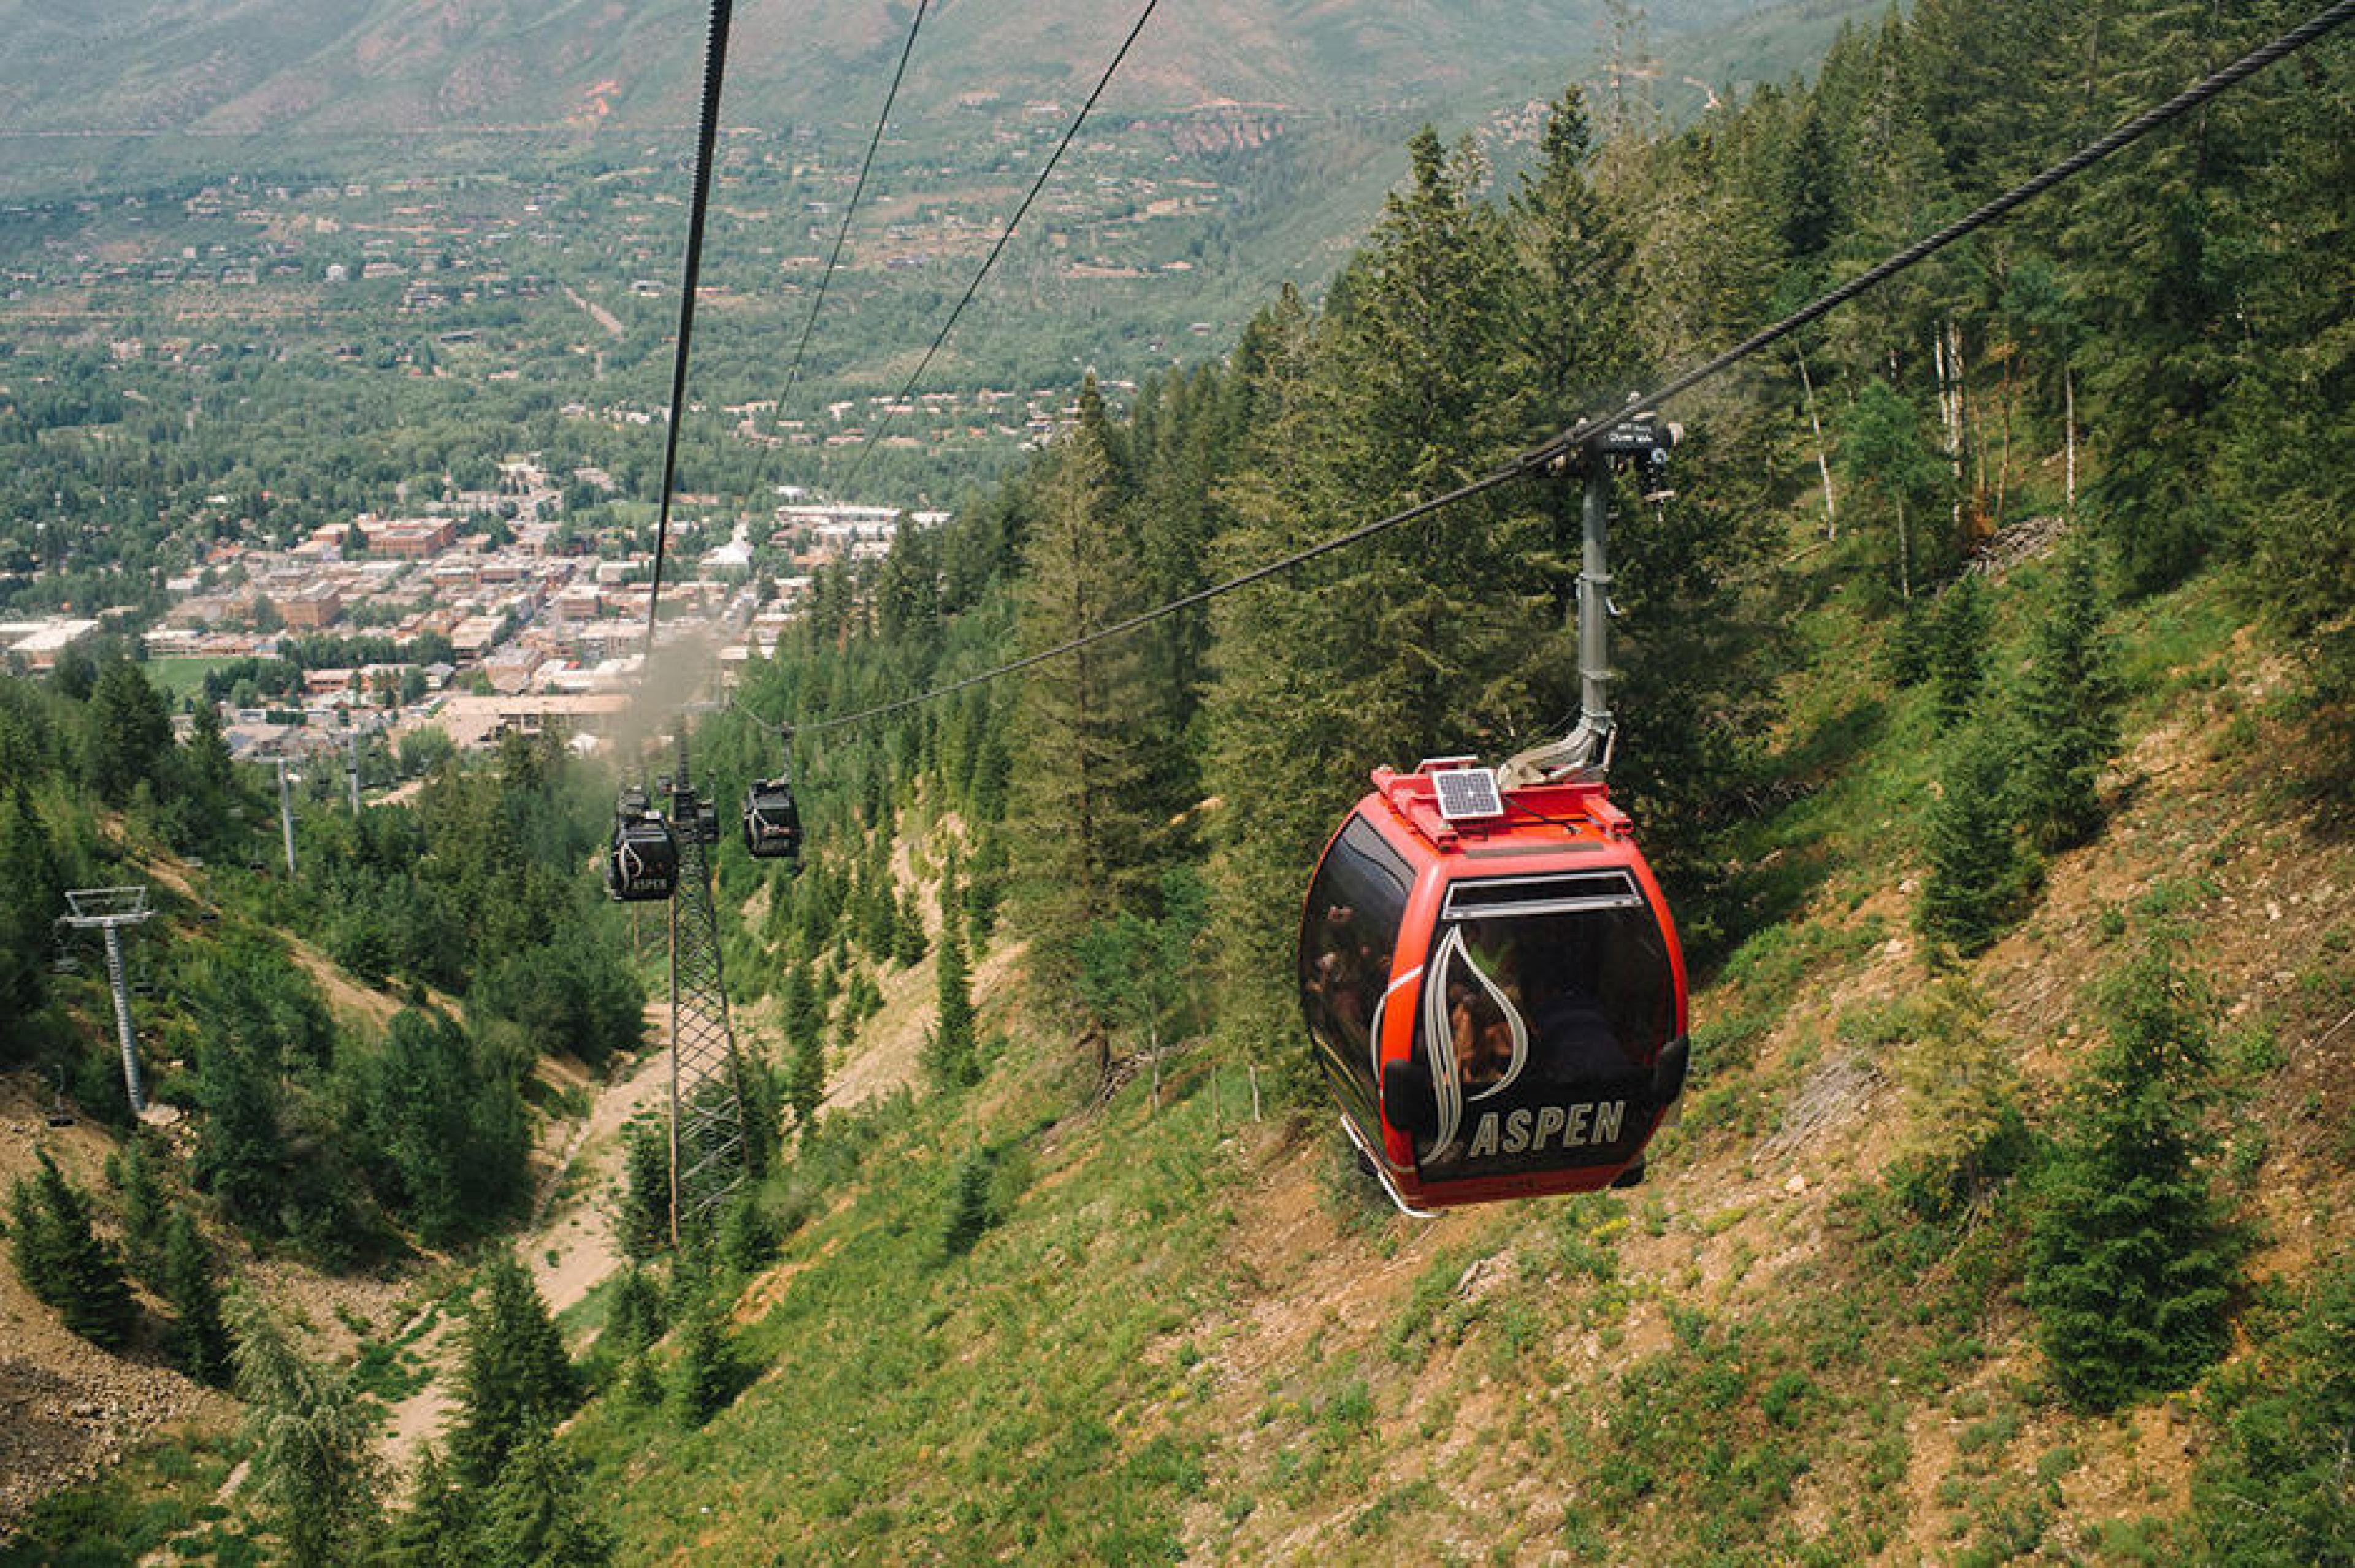 Gondola at Silver Queen Gondola, Aspen, American West - Courtesy Aspen Skiing Company